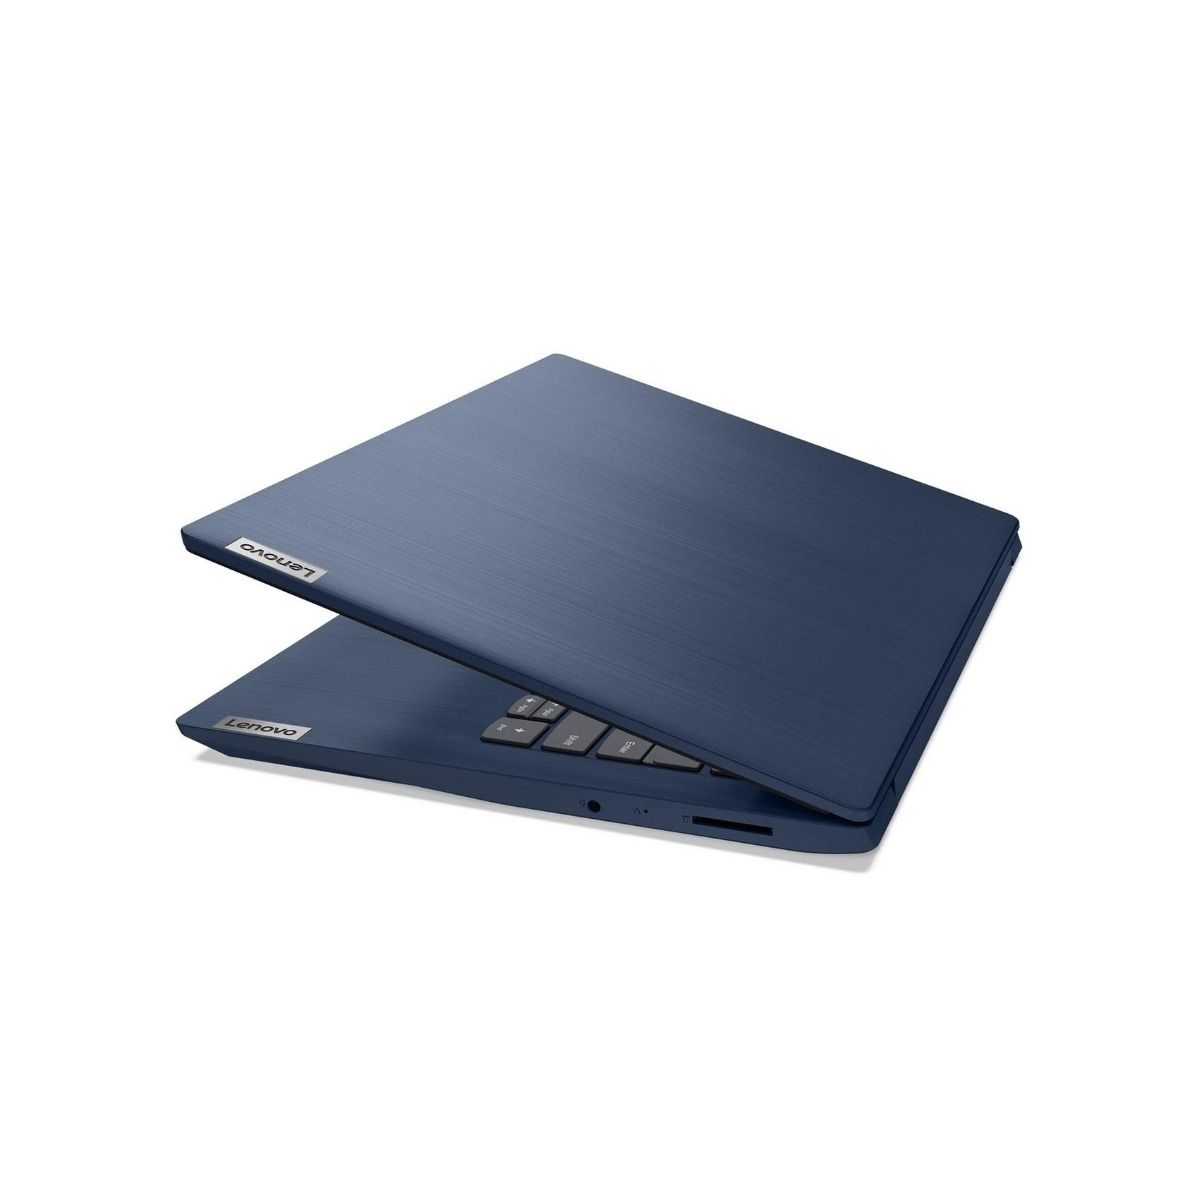 Lenovo IdeaPad 3 14ITL05 14" Laptop Intel Core i5 11th Gen 8GB RAM 256GB SSD